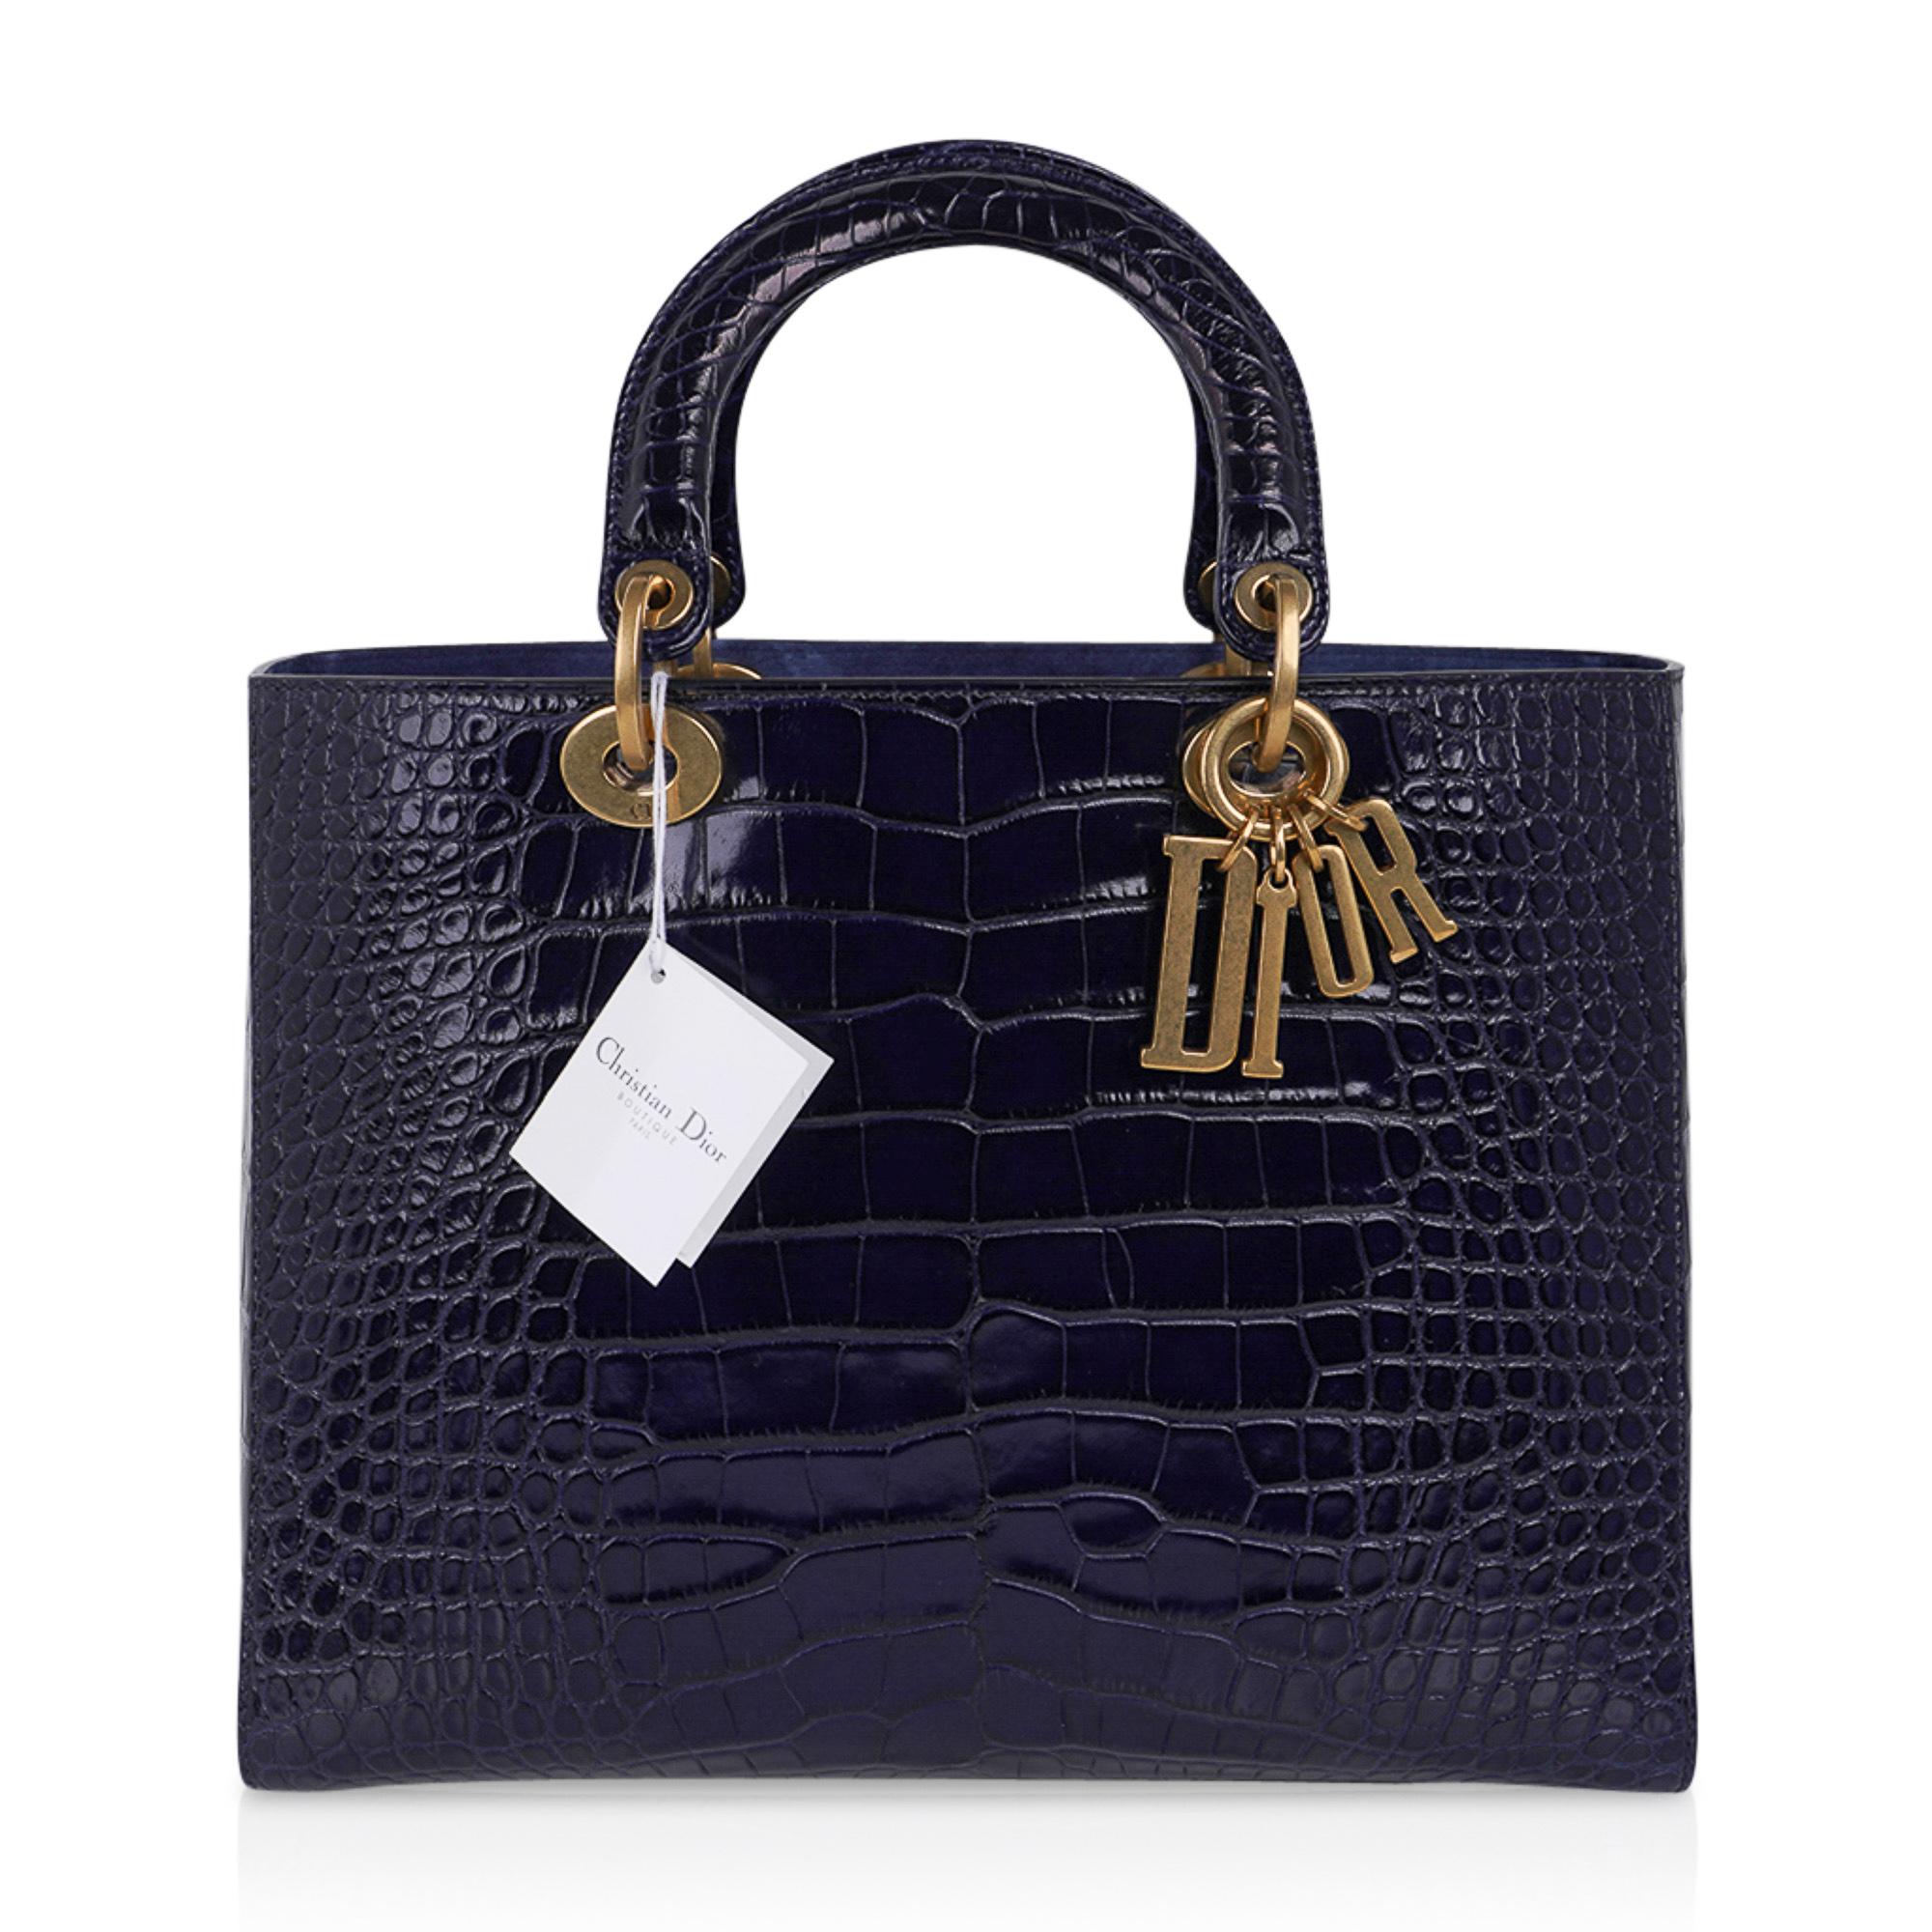 Black Christian Dior Bag Lady Dior Large Navy Matte Navy Alligator New w/Tag For Sale